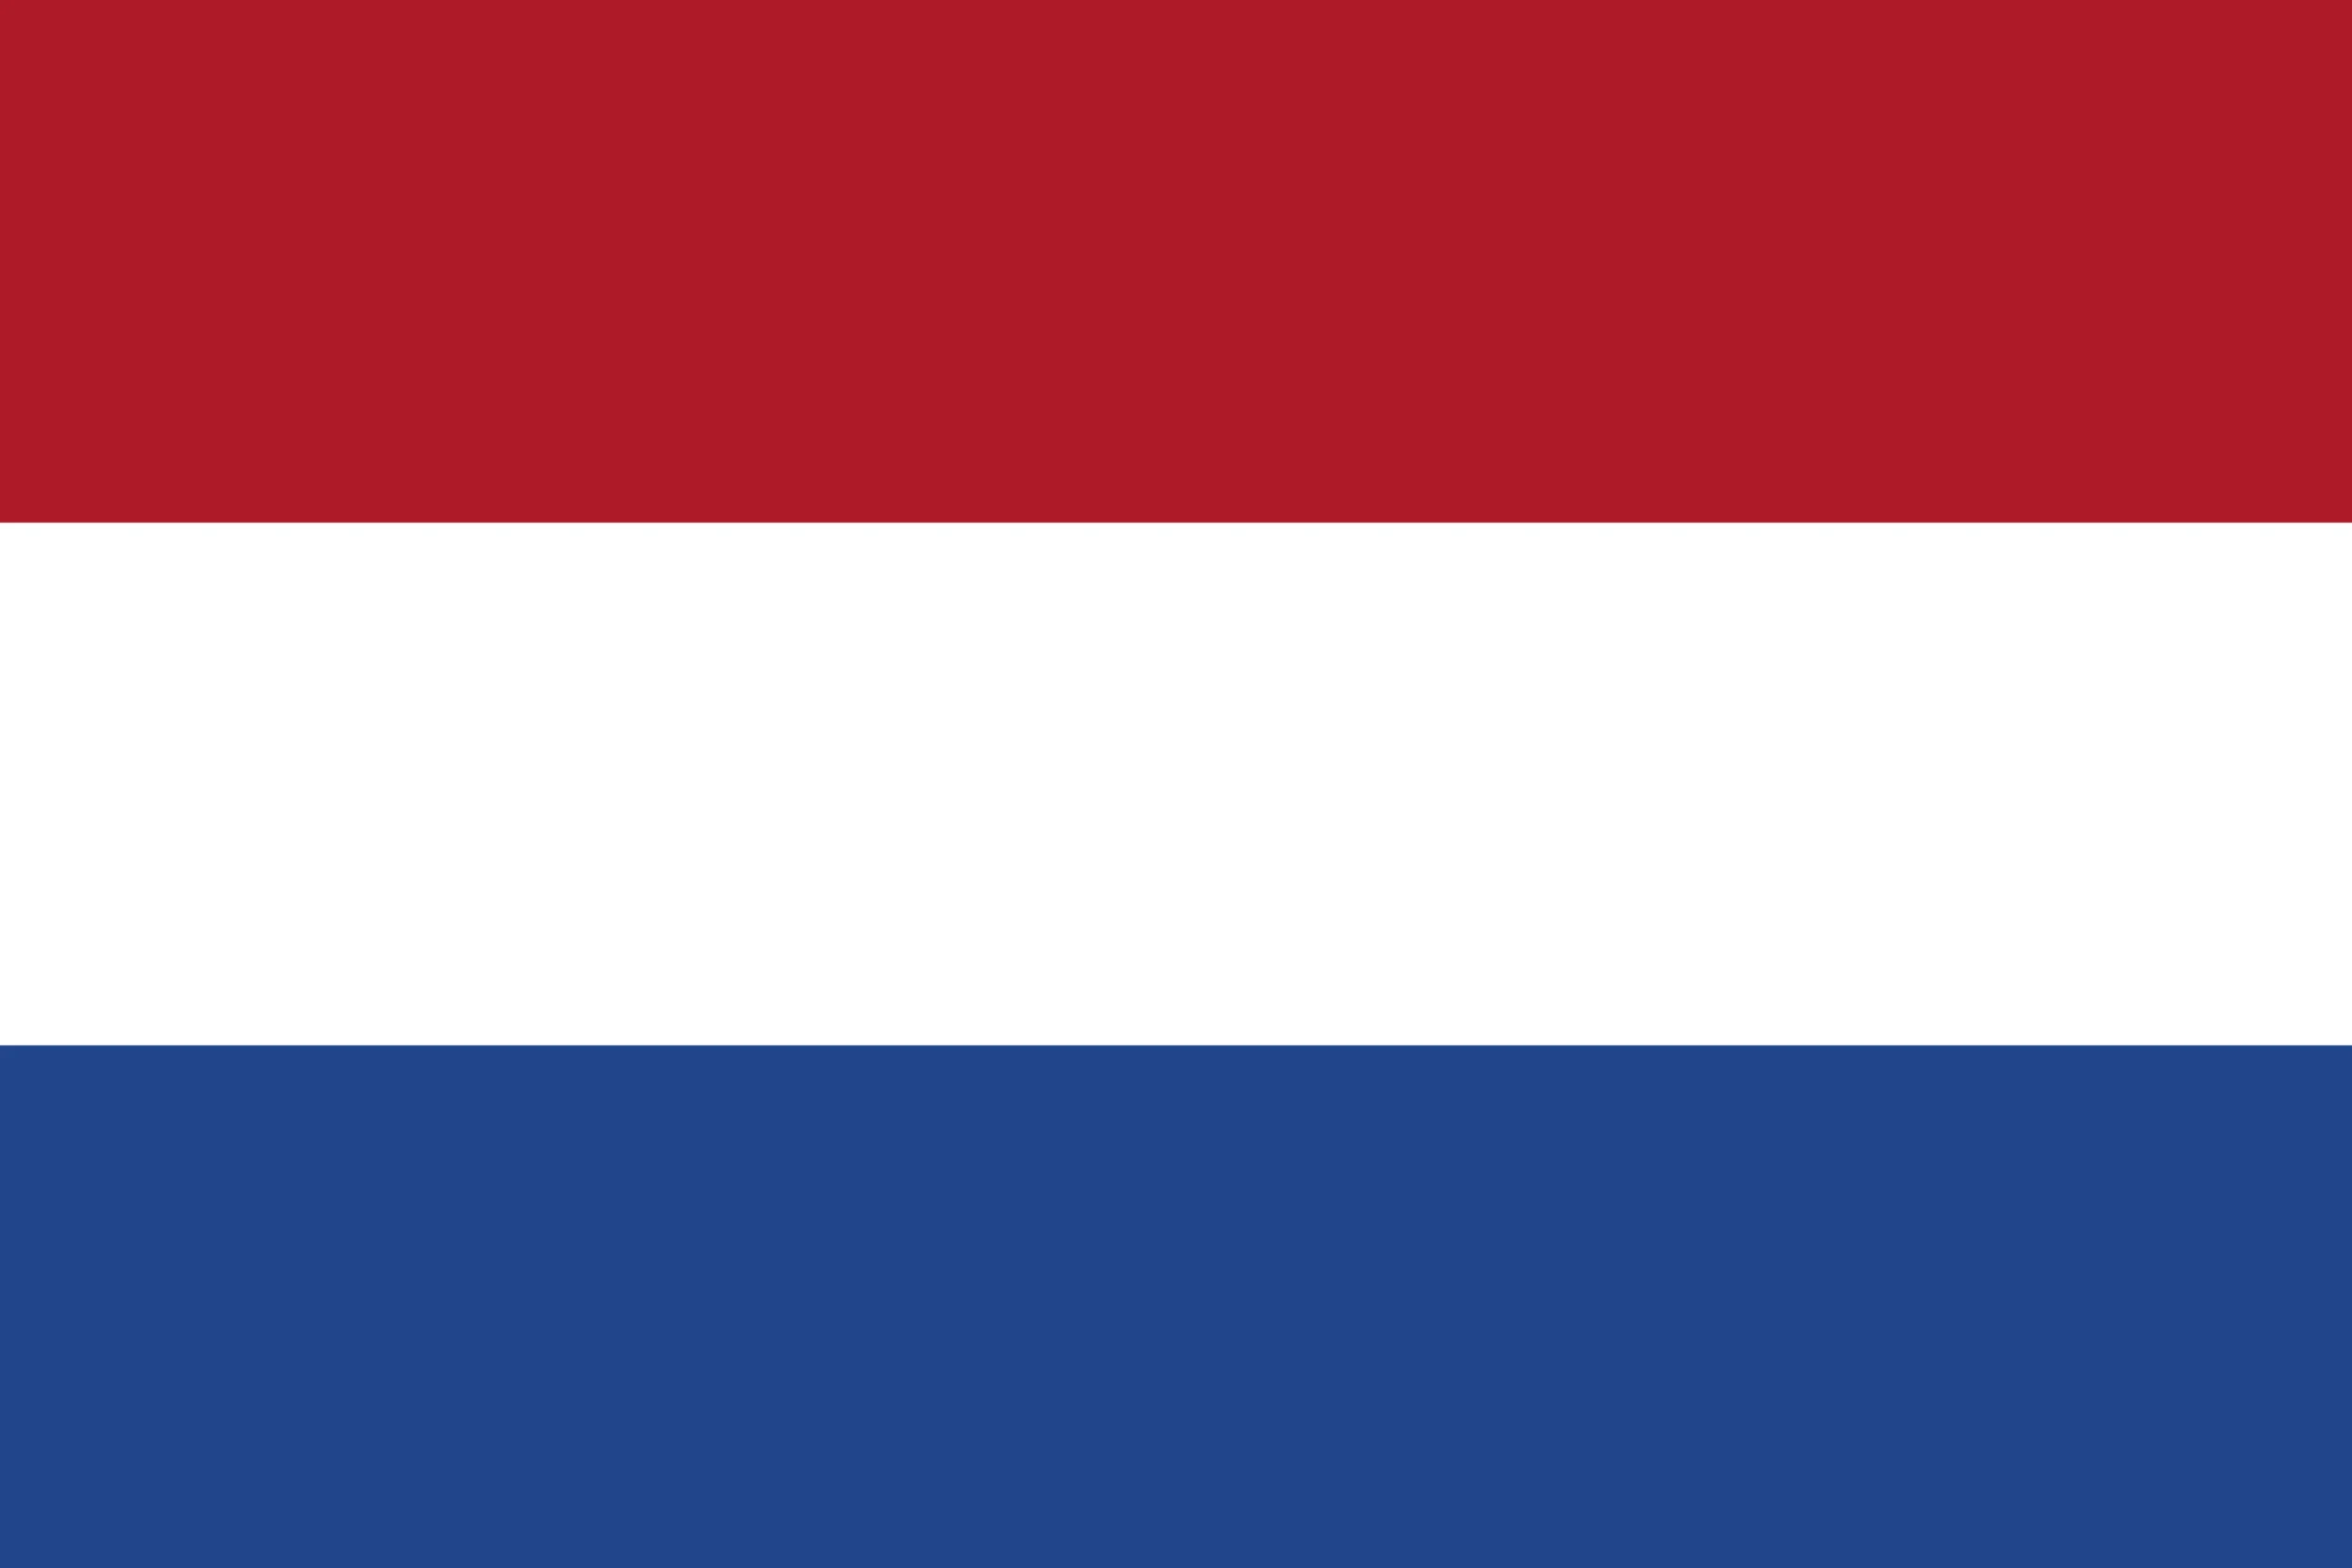 Bulk SMS Netherlands